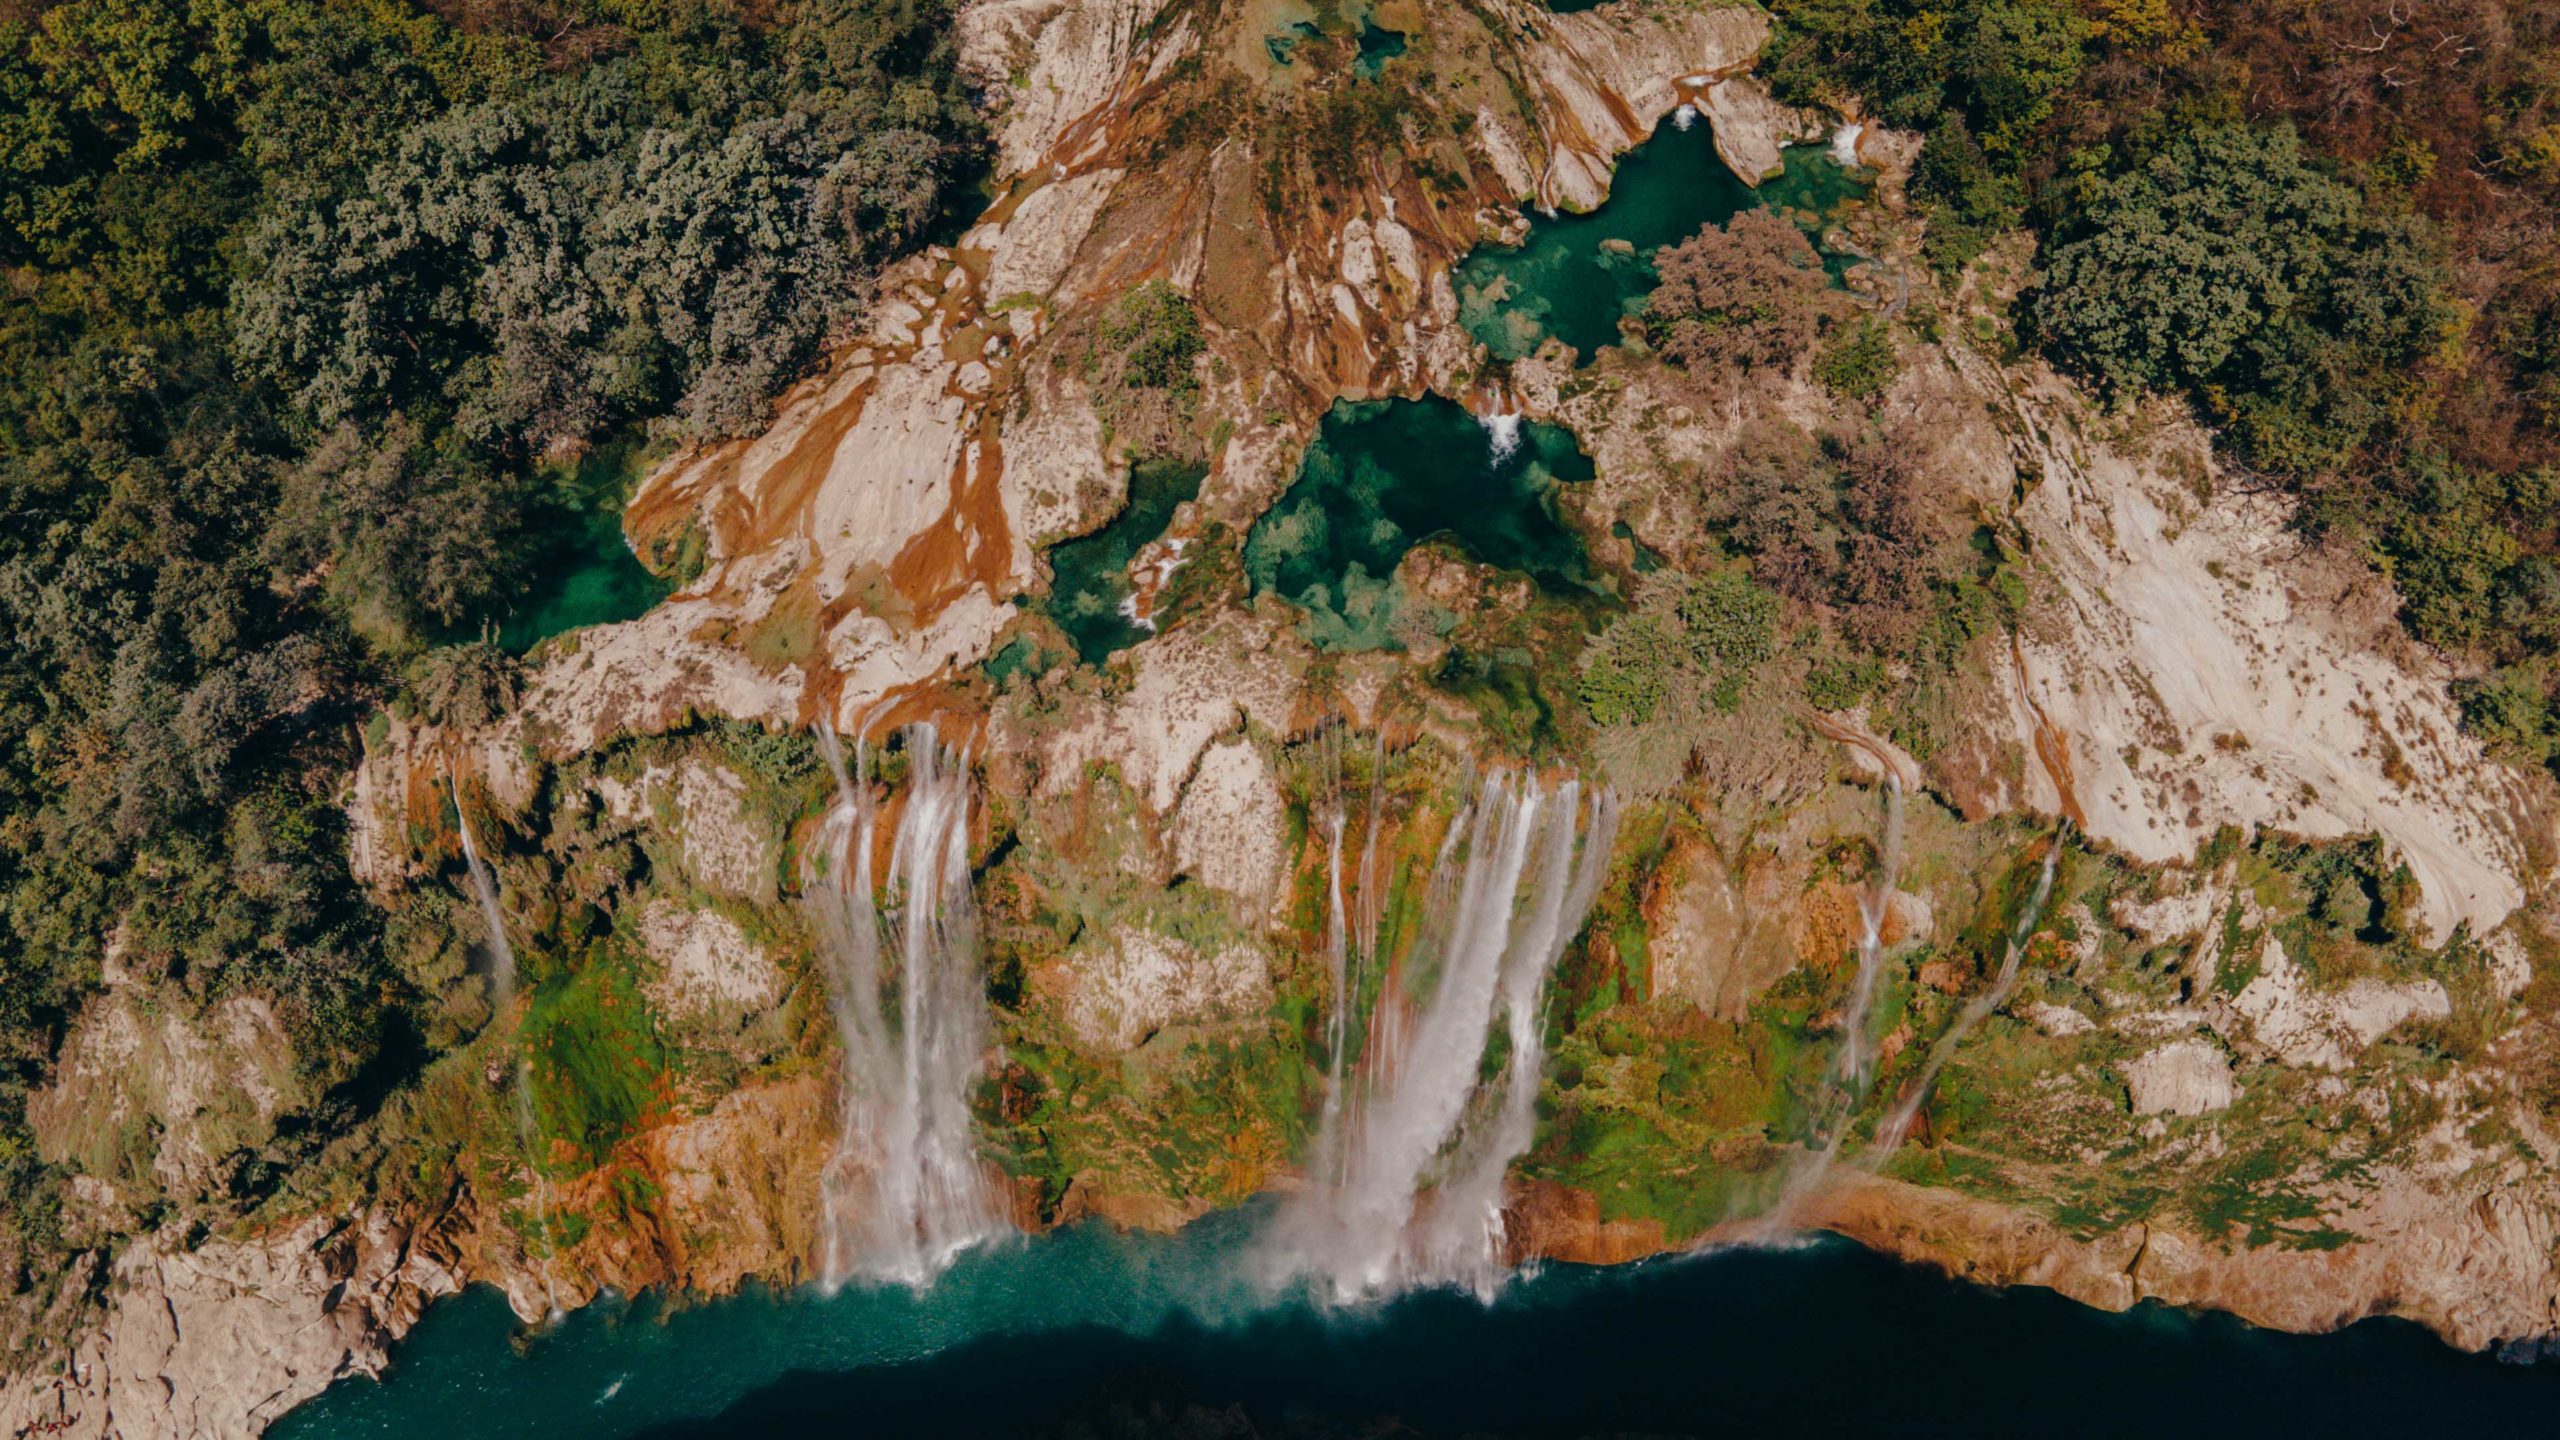 Tamul Waterfall near Ciudad Valles